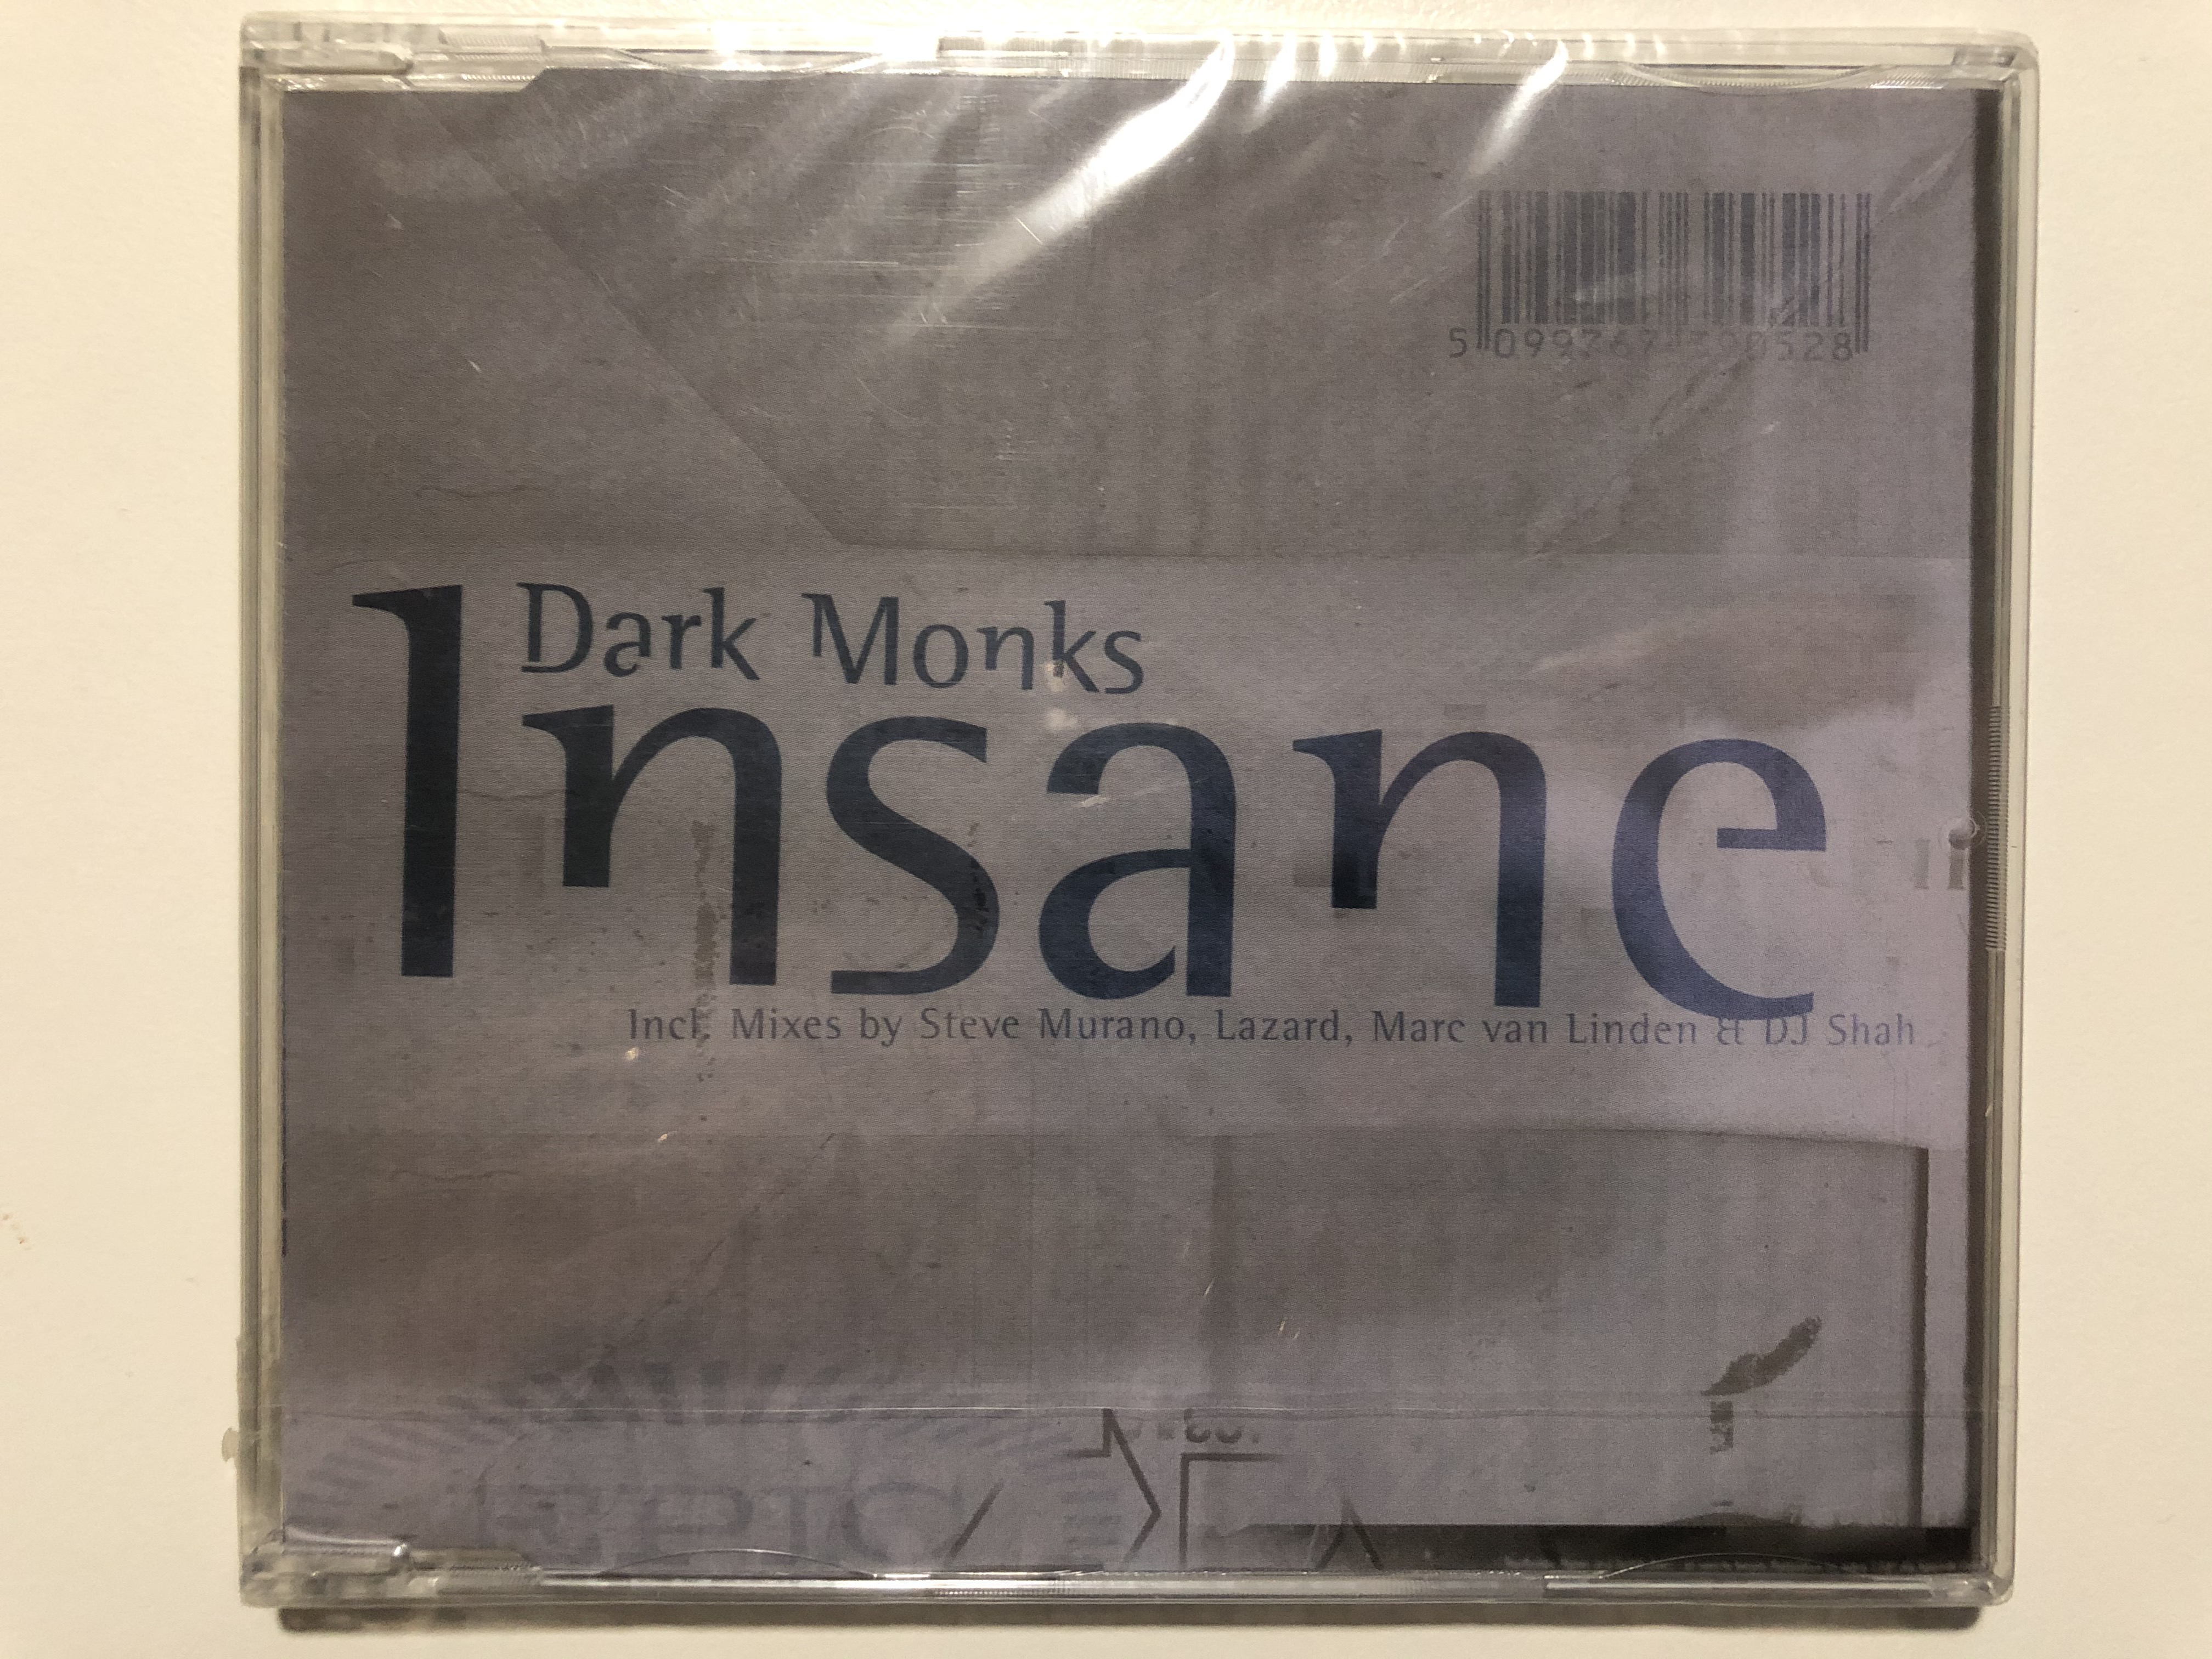 dark-monks-insane-incl.-mixes-by-steve-murano-lazard-marc-van-linden-dj-shah-epic-audio-cd-2003-6739052000-1-.jpg